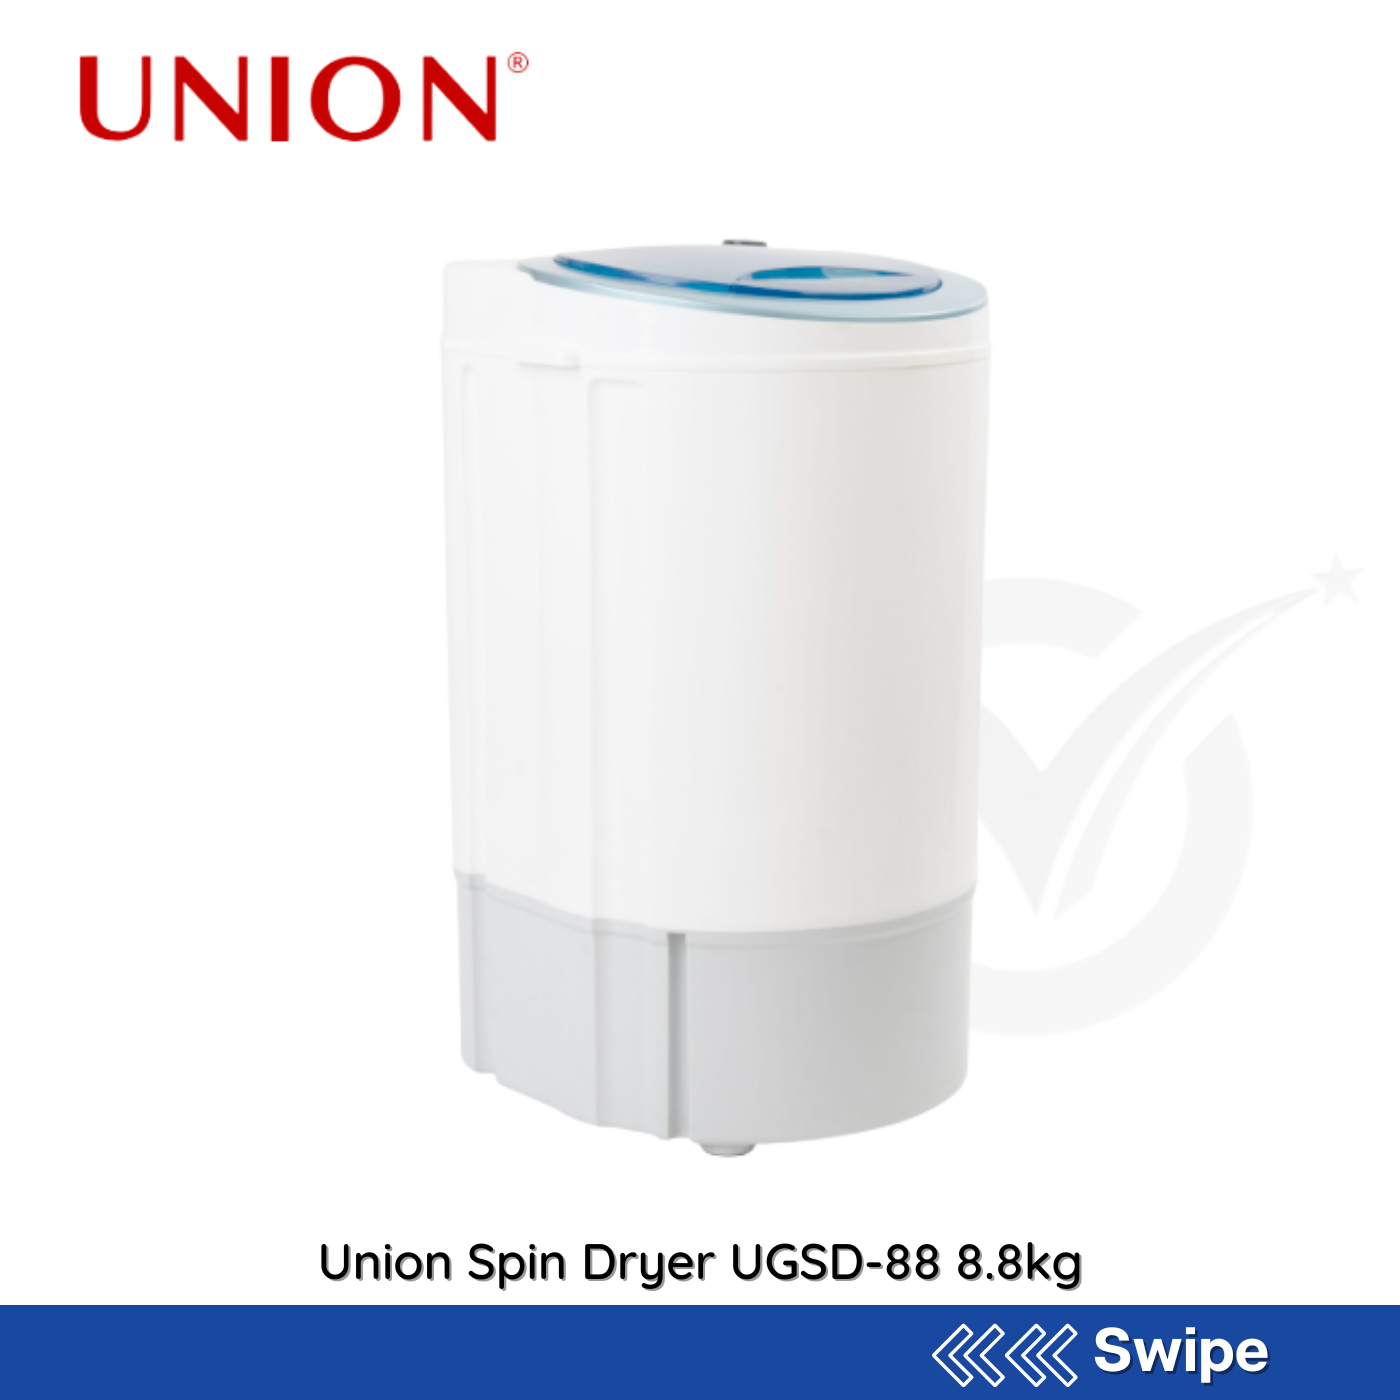 Union Spin Dryer UGSD-88 8.8kg